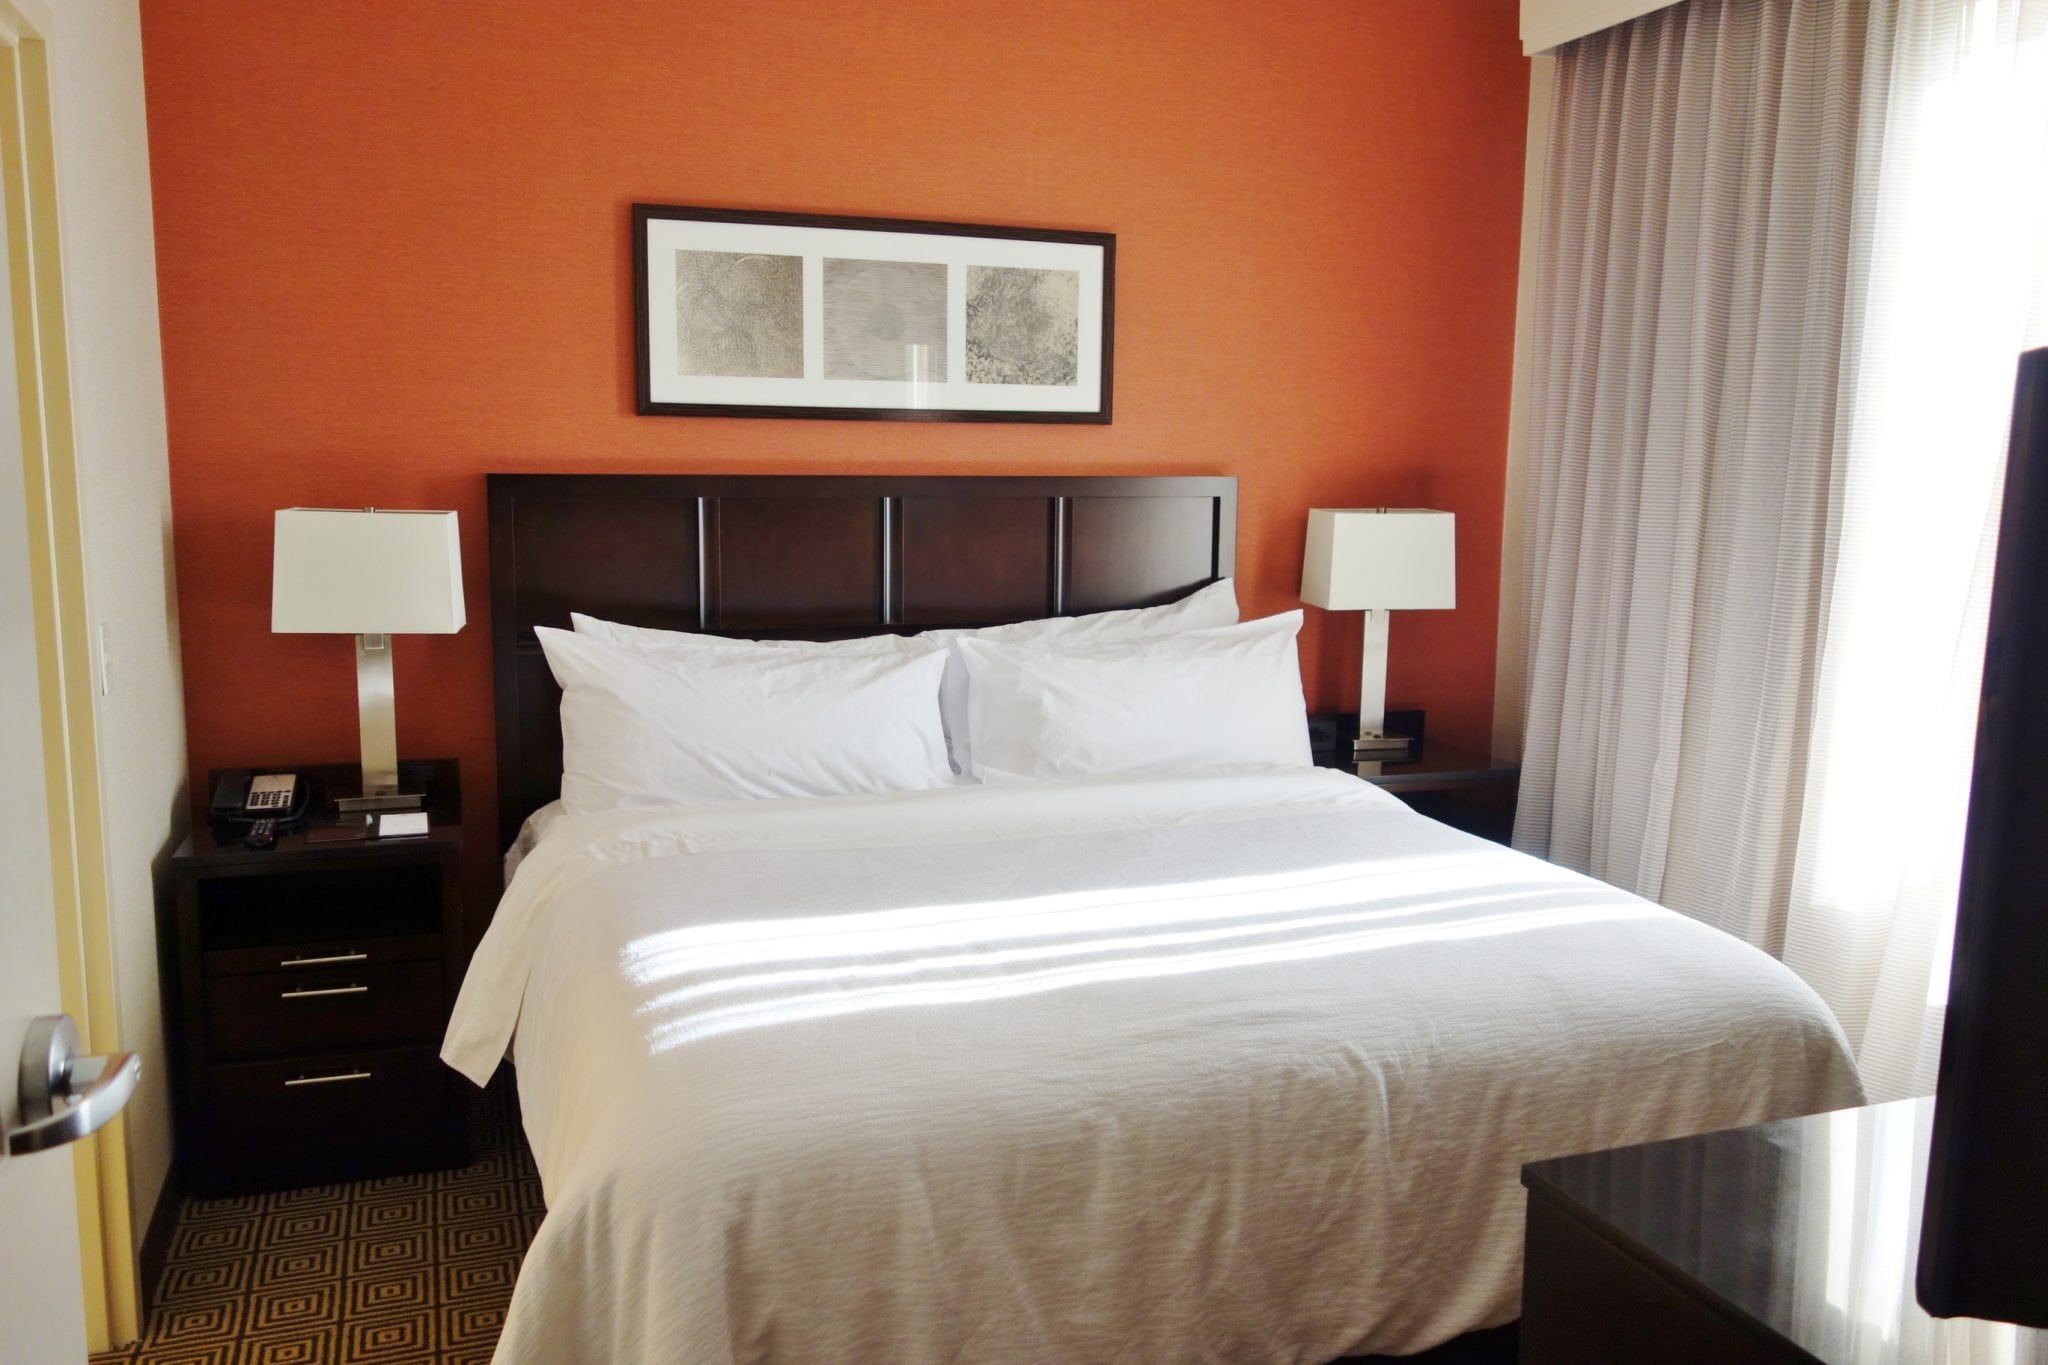 Bedroom Embassy Suites Elizabeth NJ Review